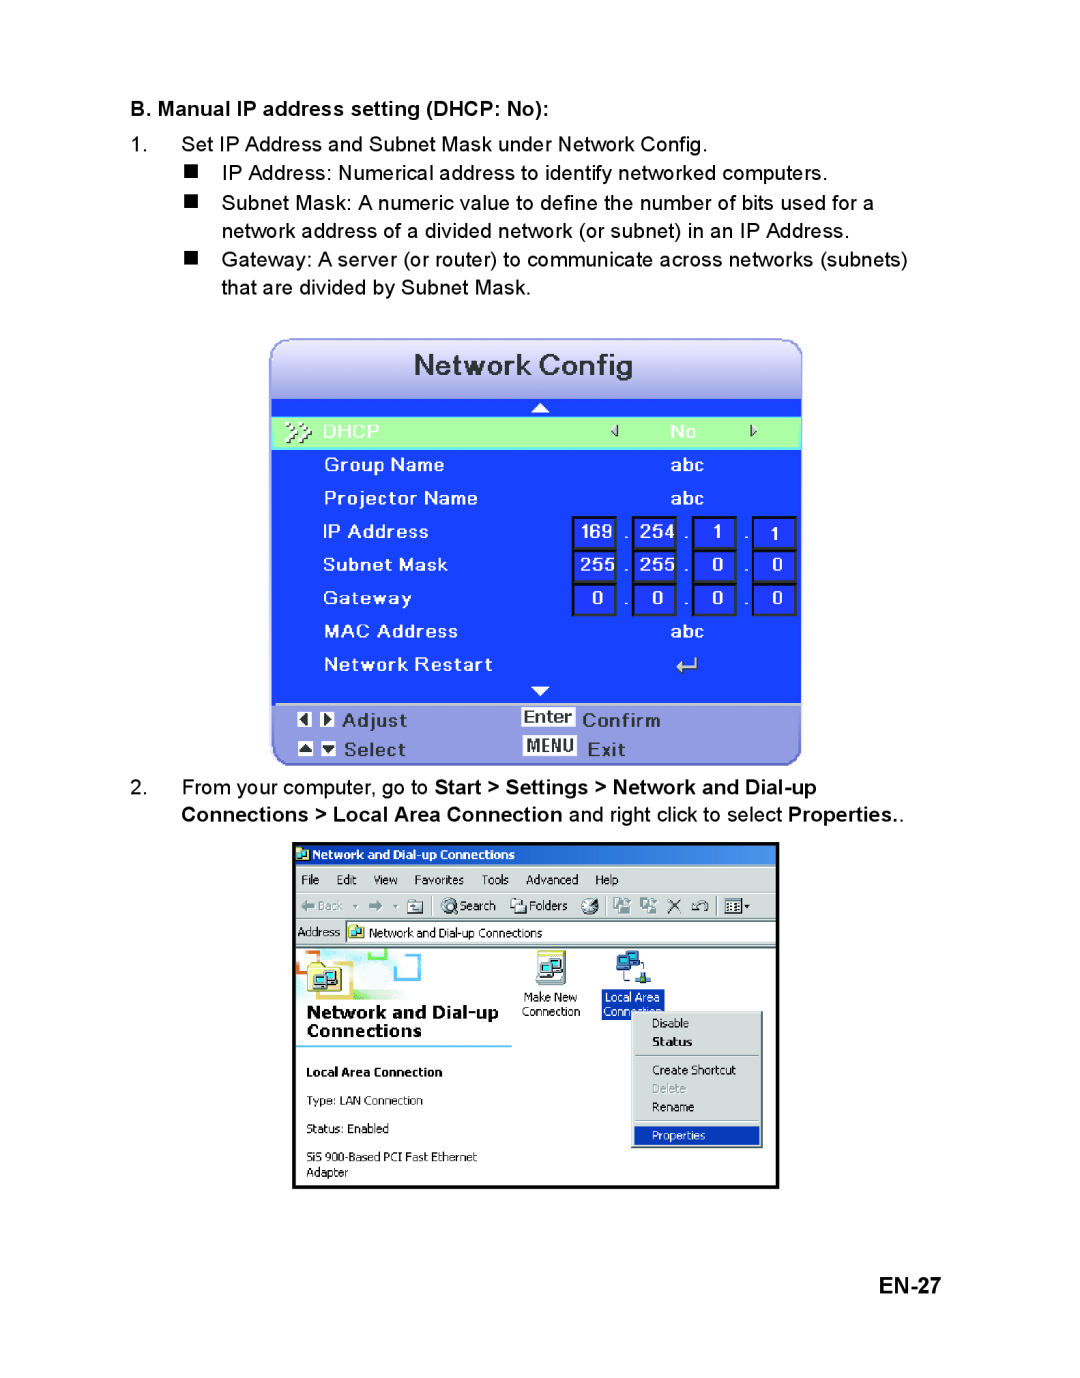 ViewSonic VS12476 warranty EN-27, B. Manual IP address setting DHCP No 